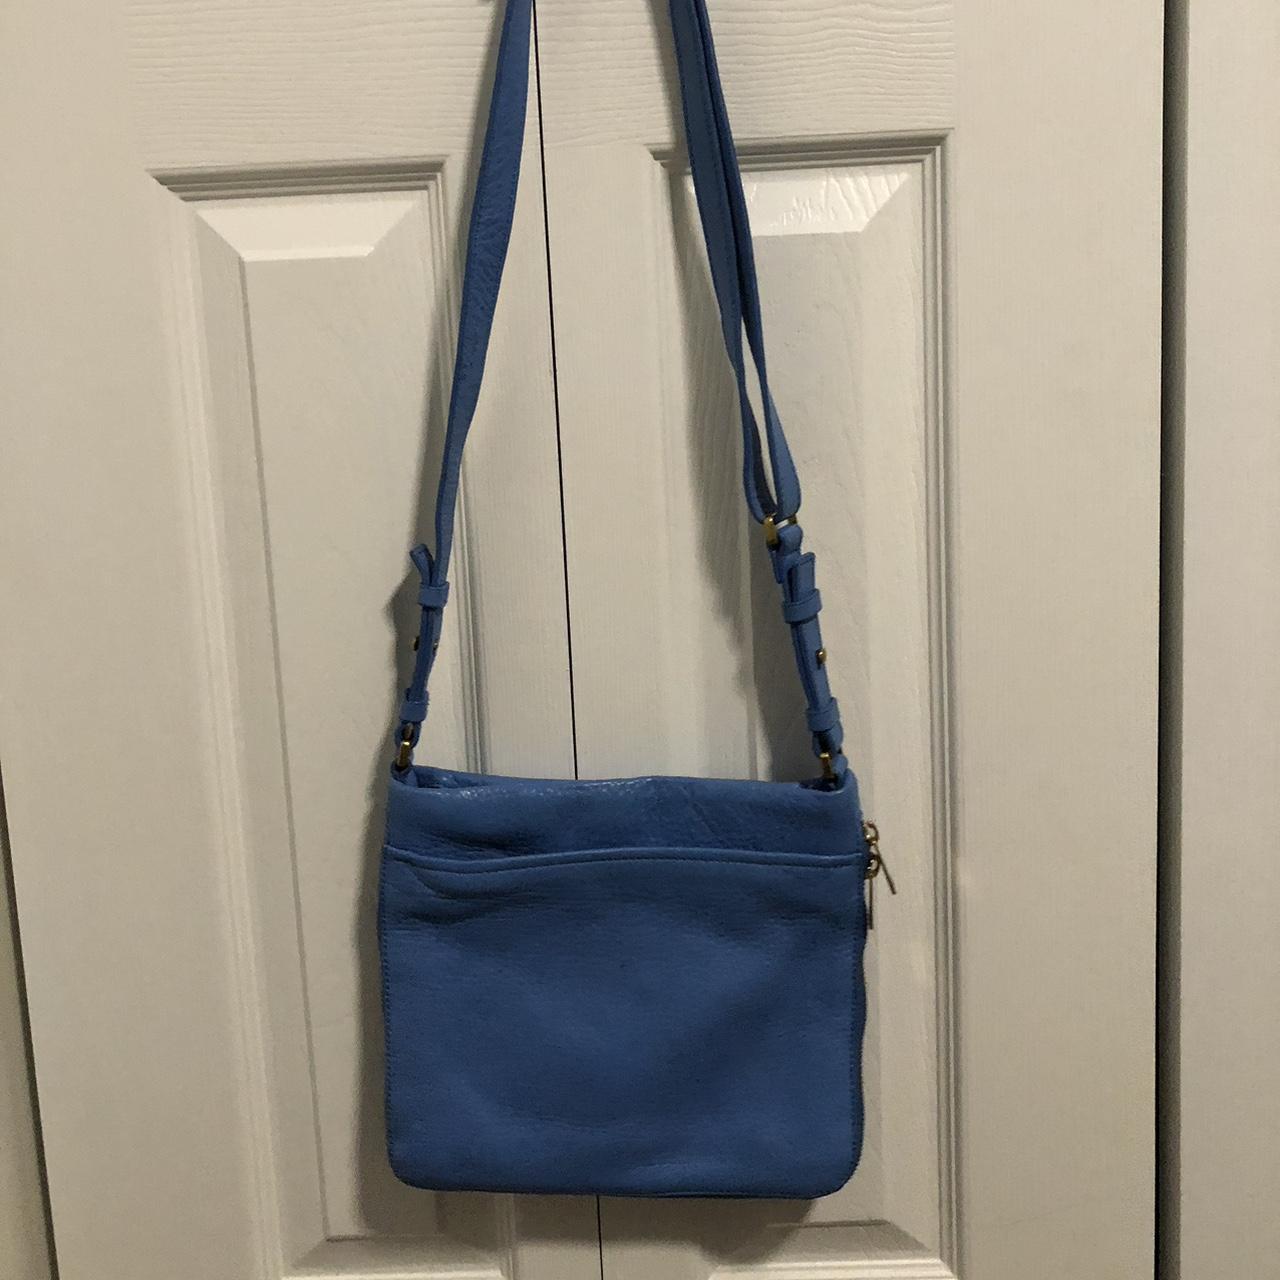 Fossil | Bags | Fossil Keyper Crossbody Bag Floral Blue Small Purse Handbag  | Poshmark